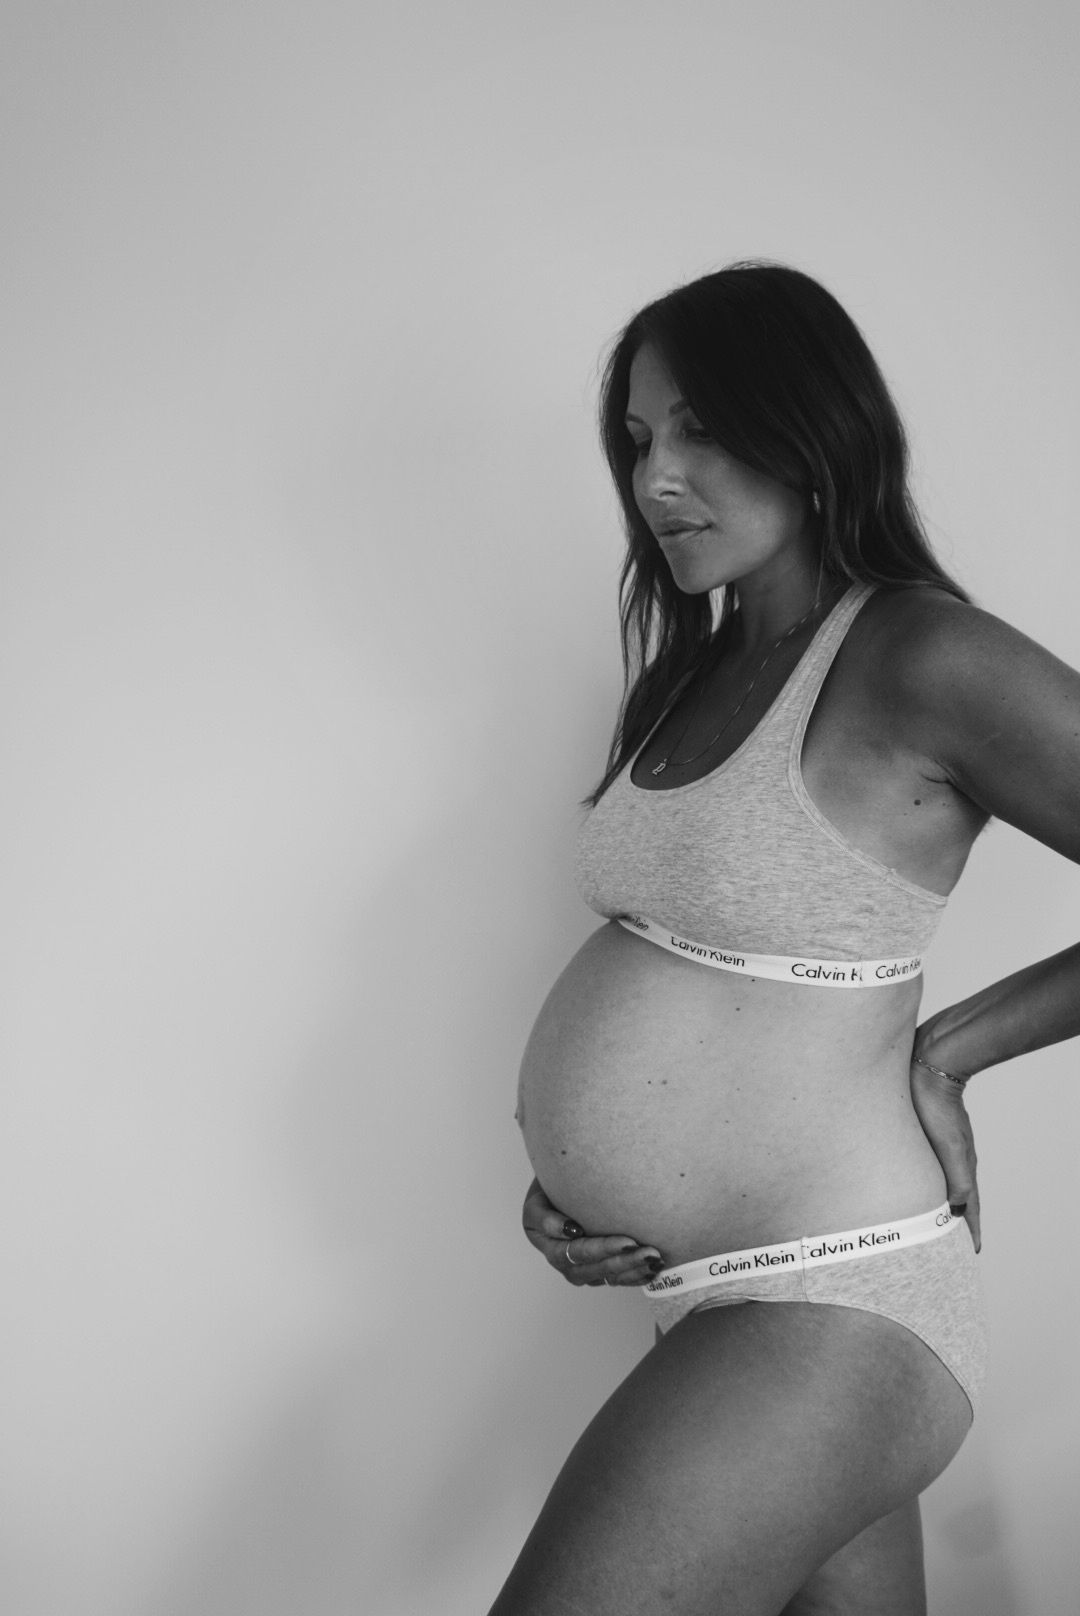 https://babeskills.com/wp-content/uploads/2020/08/Cellulite-During-Pregnancy-.jpg